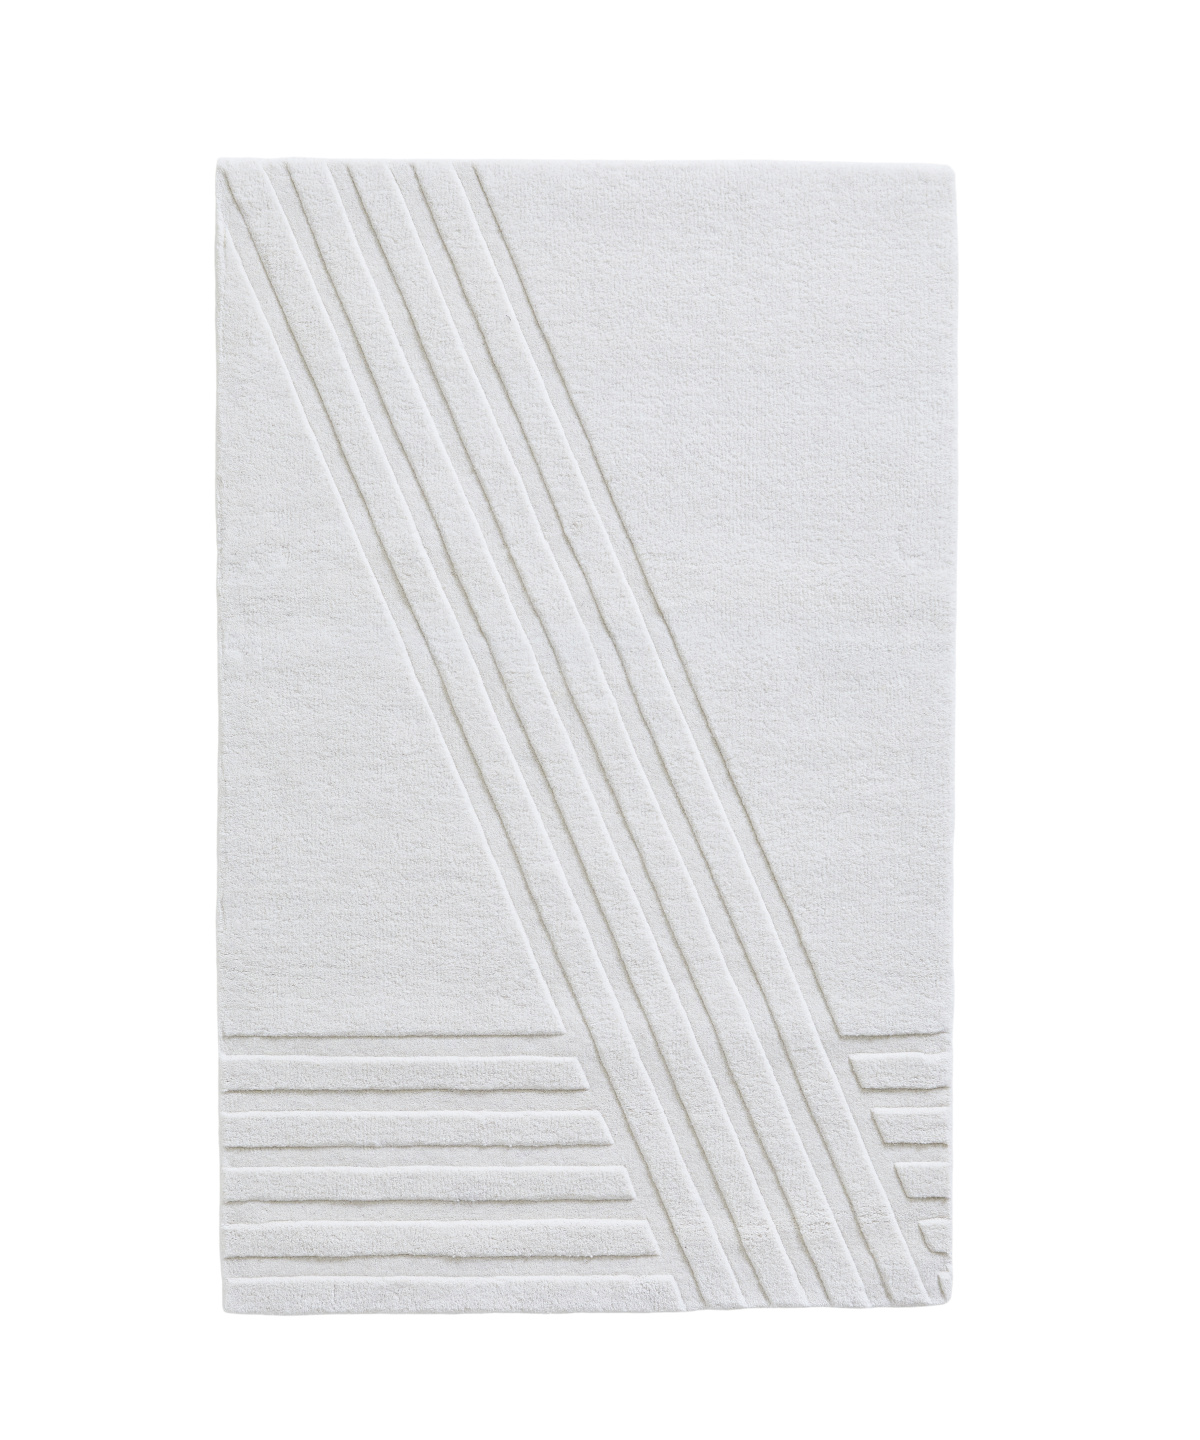 Kyoto Teppich, 210 x 340 cm, off white